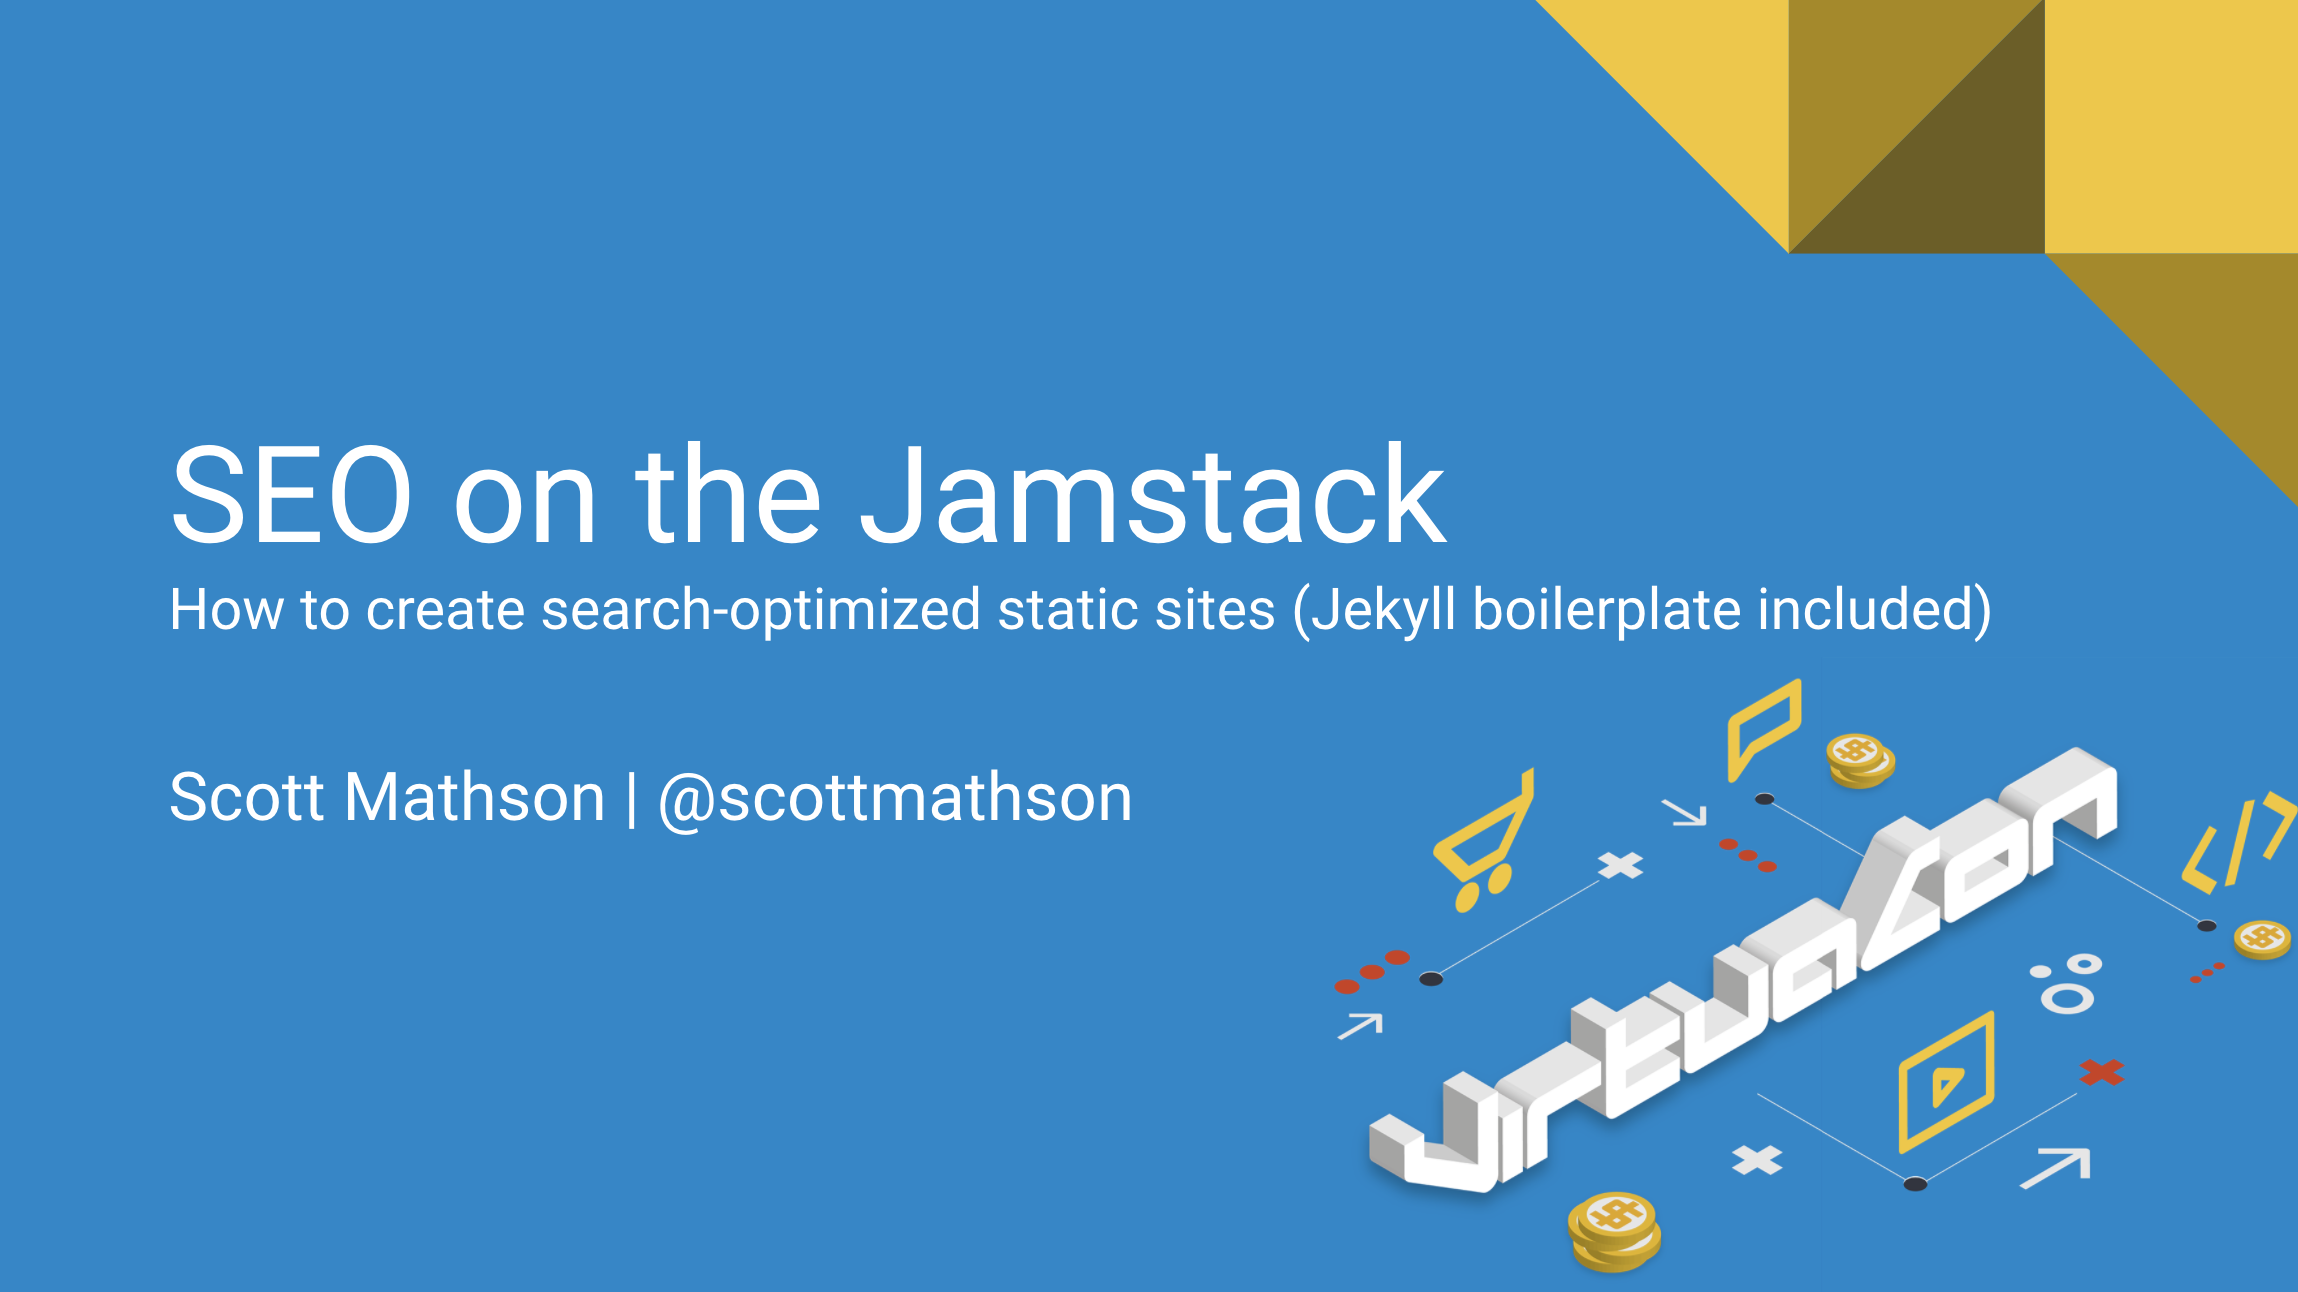 SEO on the Jamstack slides by Scott Mathson